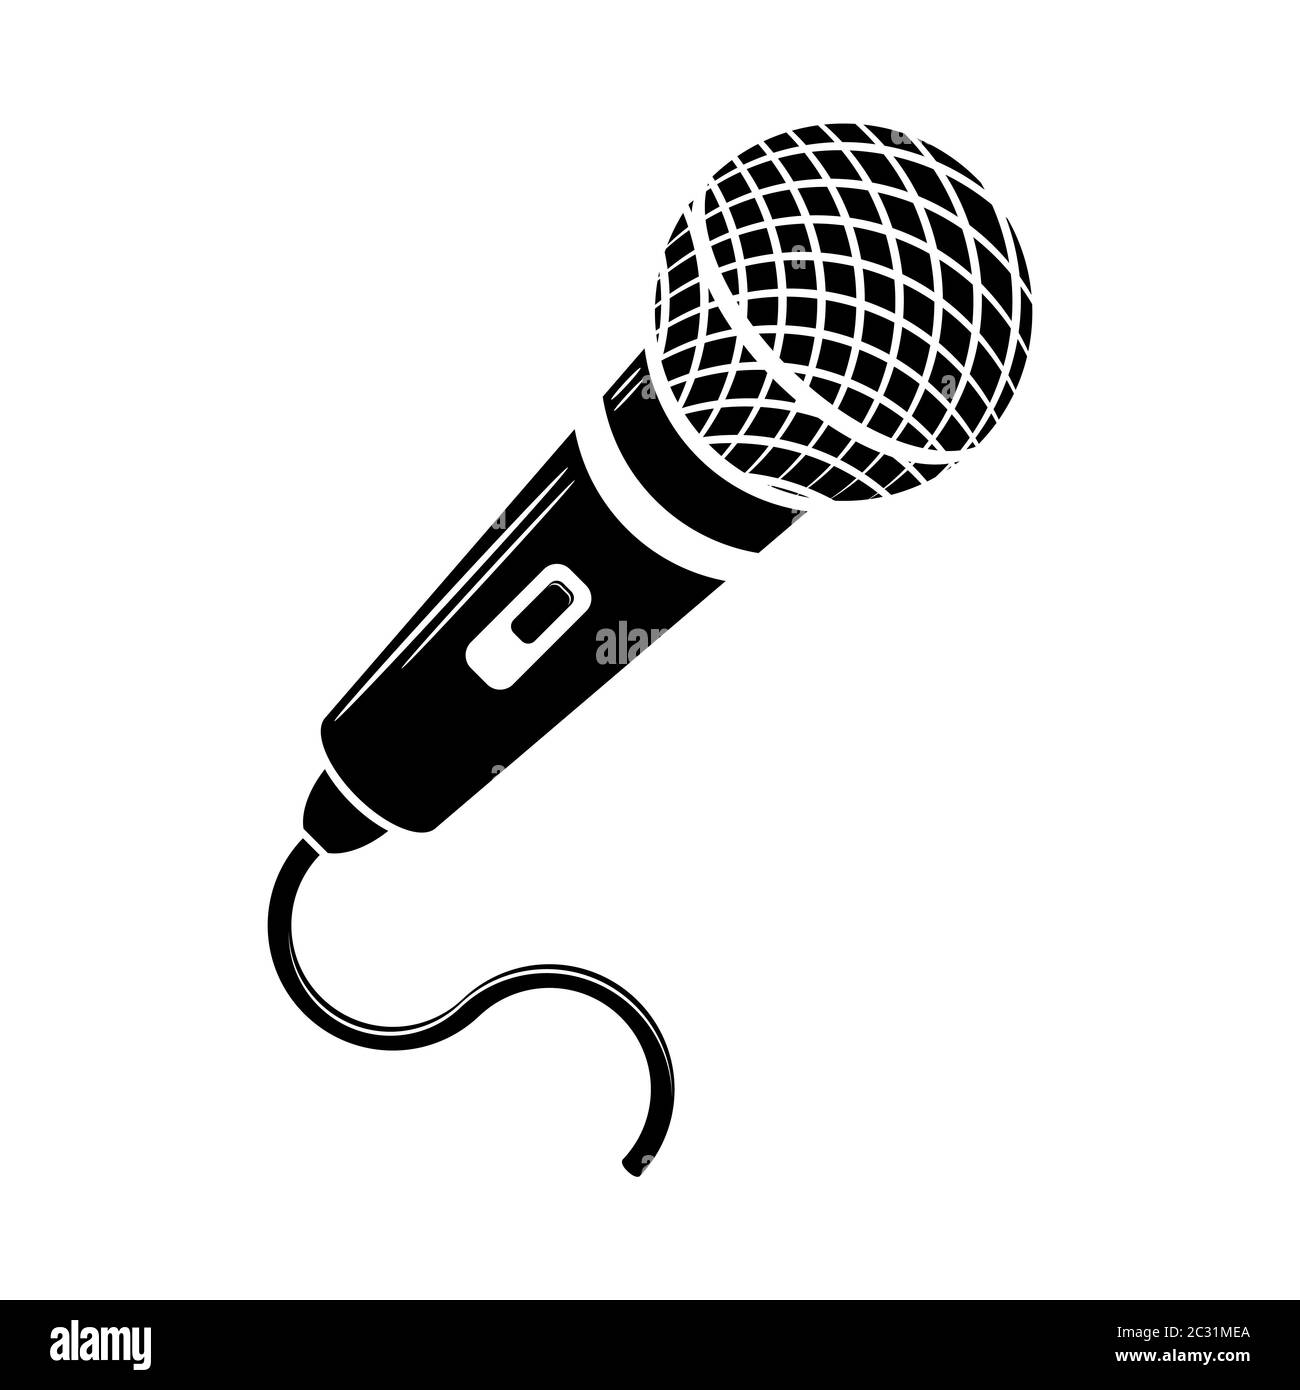 Retro Microphone Icon Isolated on White Background. Stock Photo